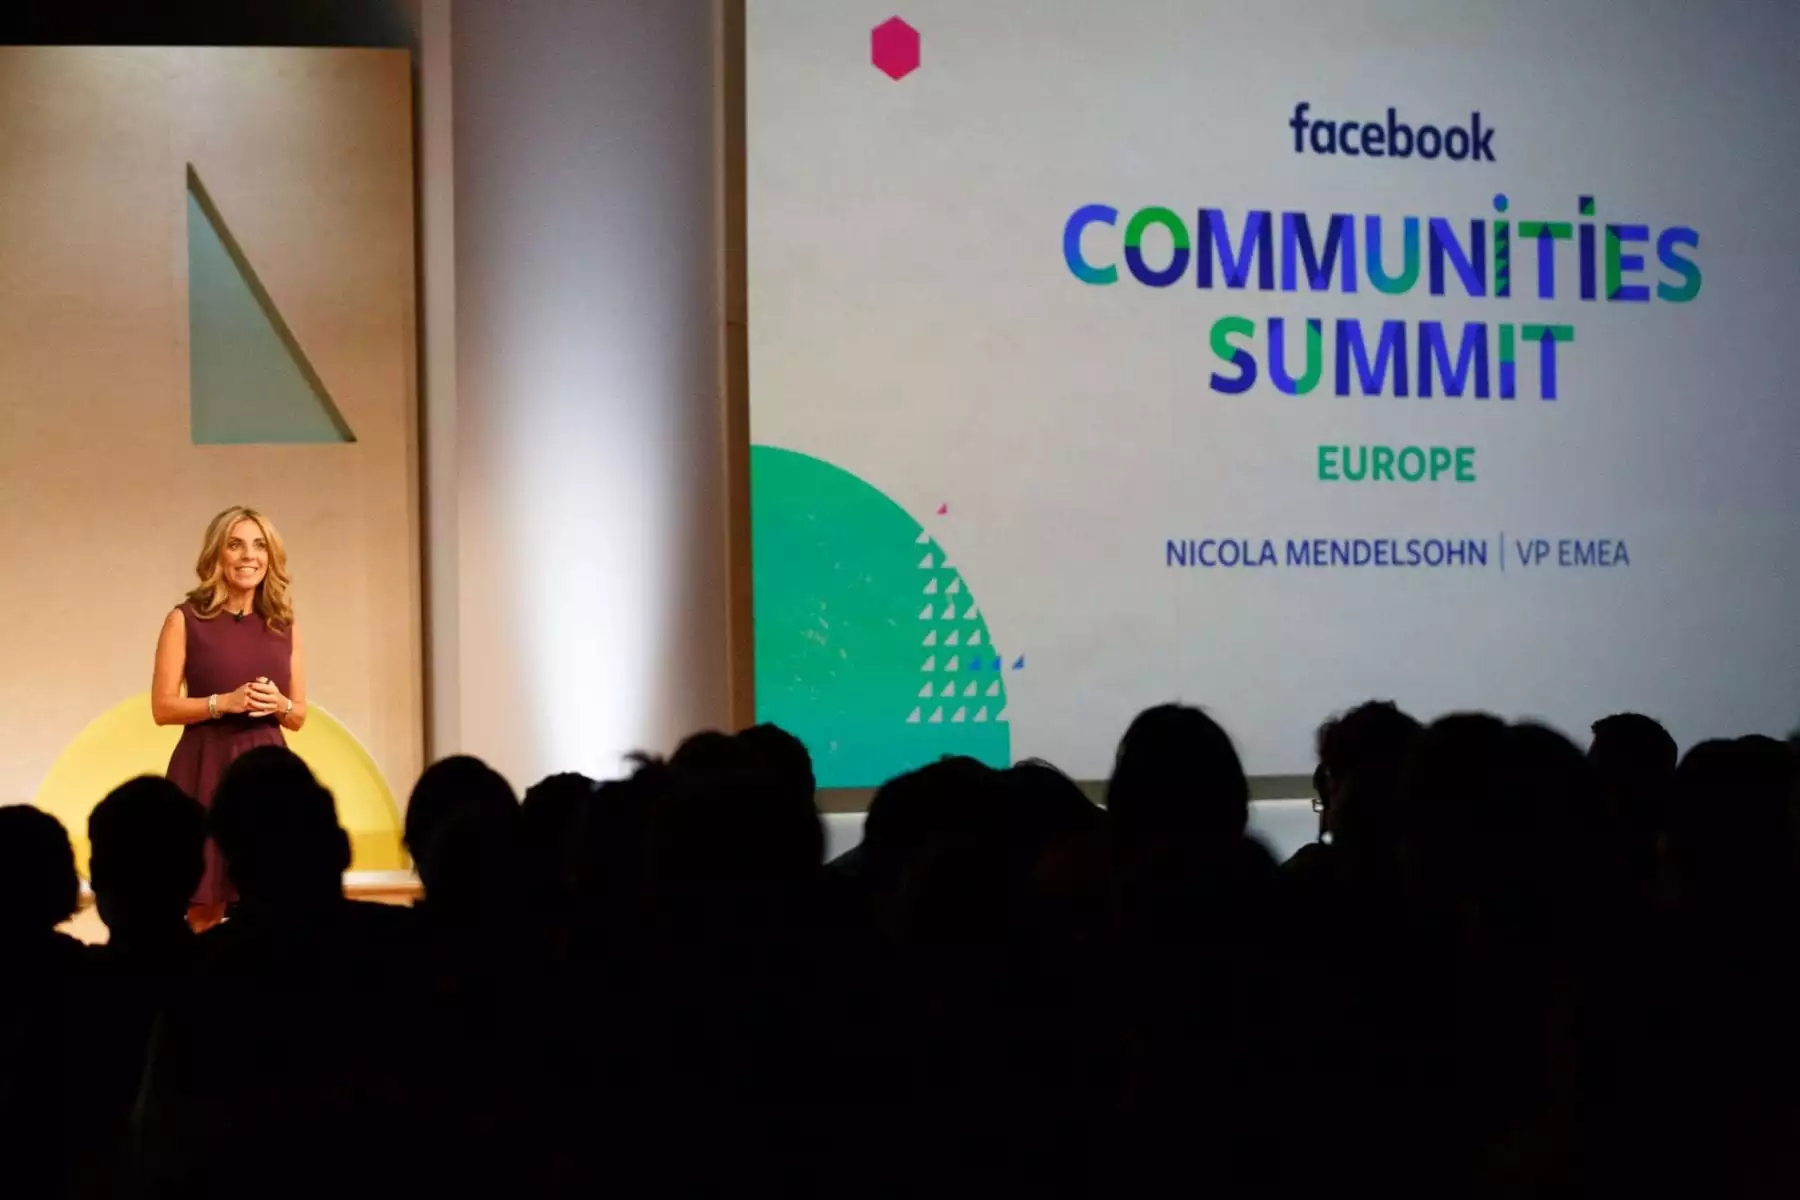 Nicola Mendelsohn, VM EMEA at Facebook, on stage at the Facebook Communities Summit Europe